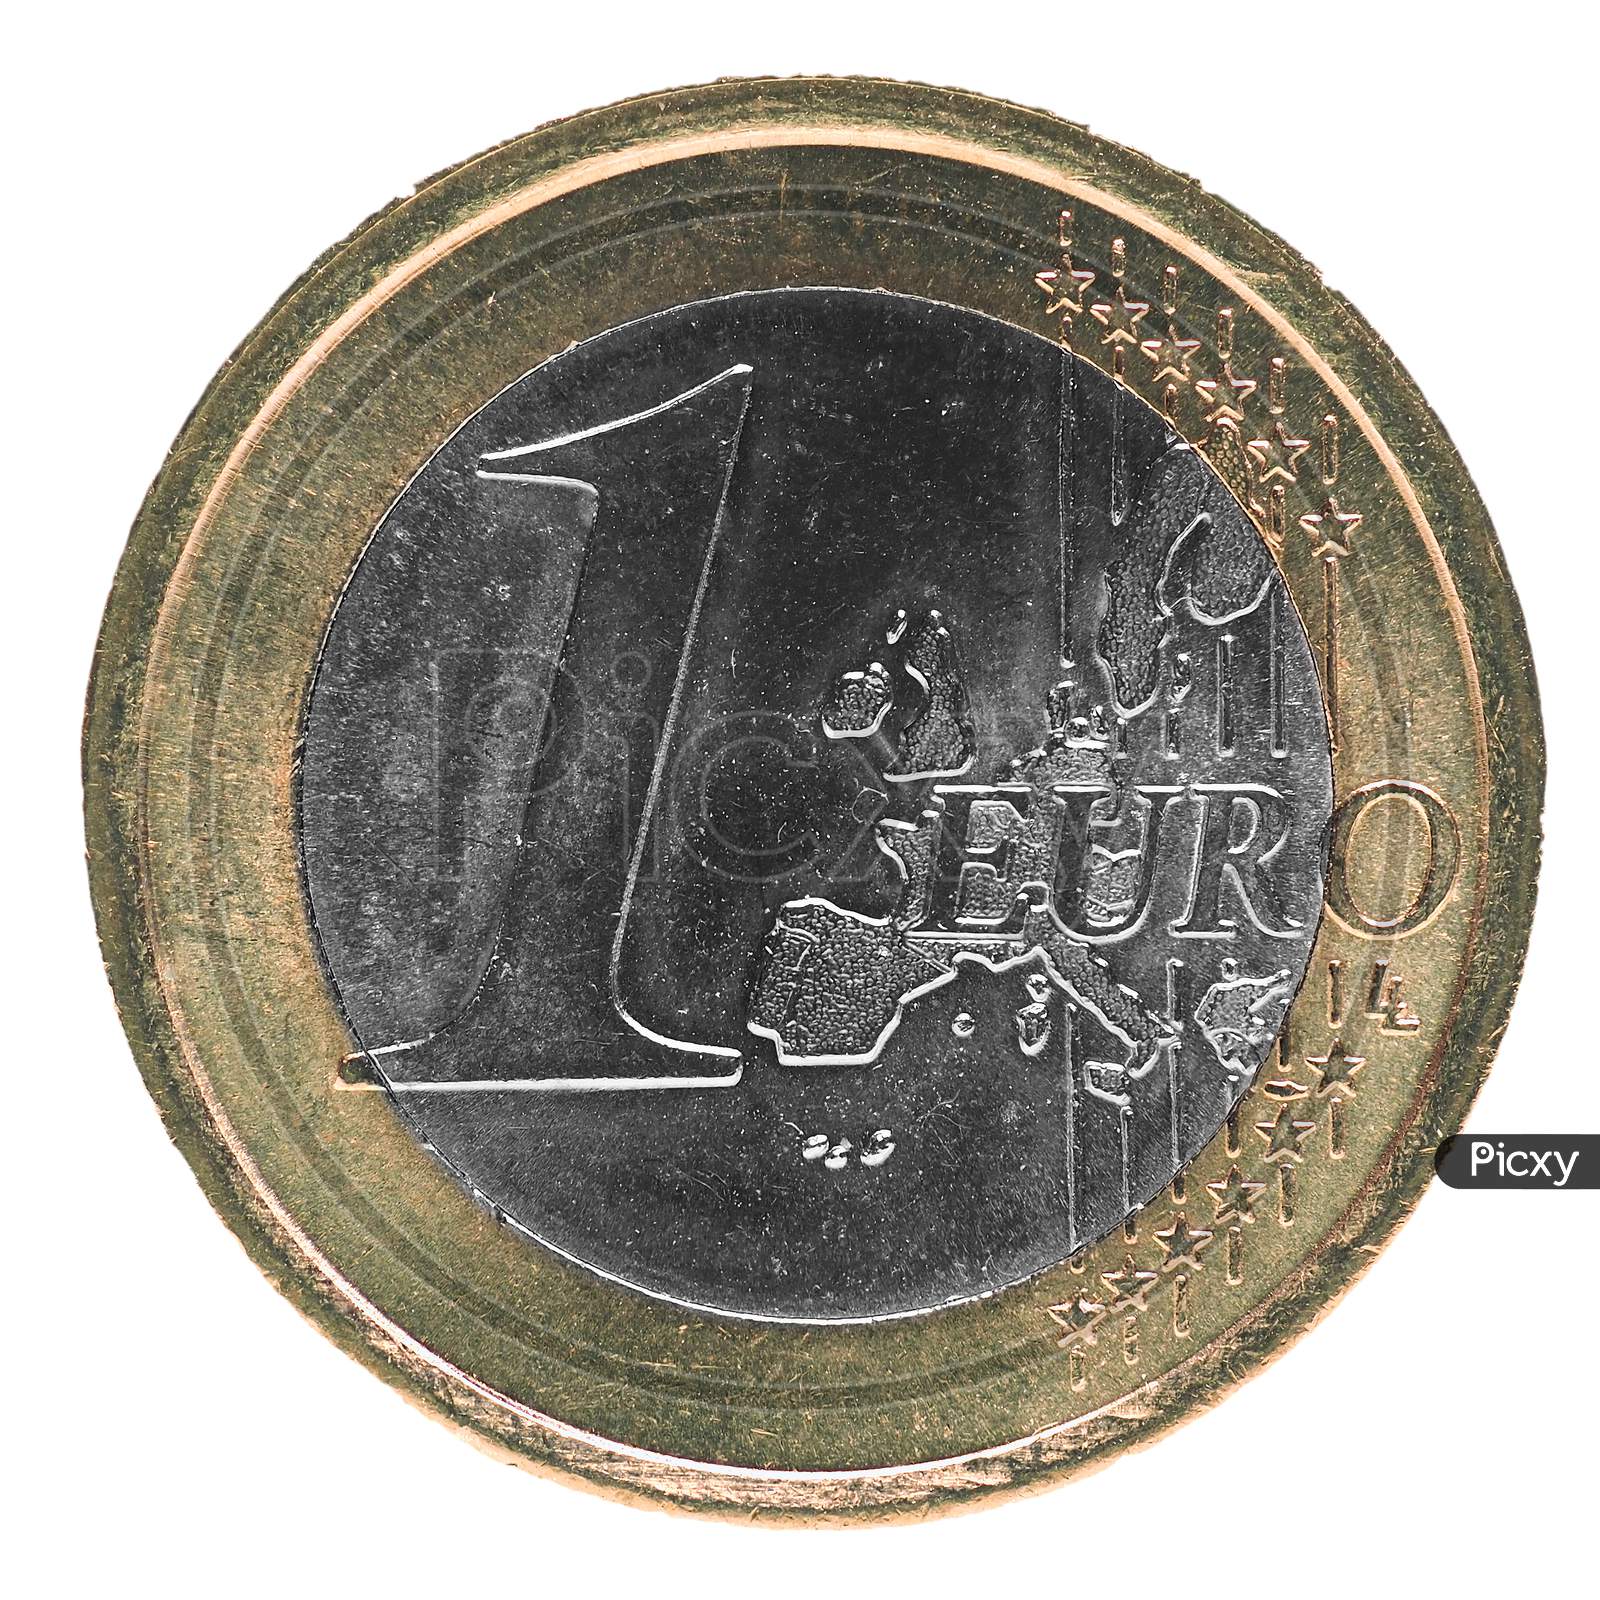 1 Euro Coin, European Union